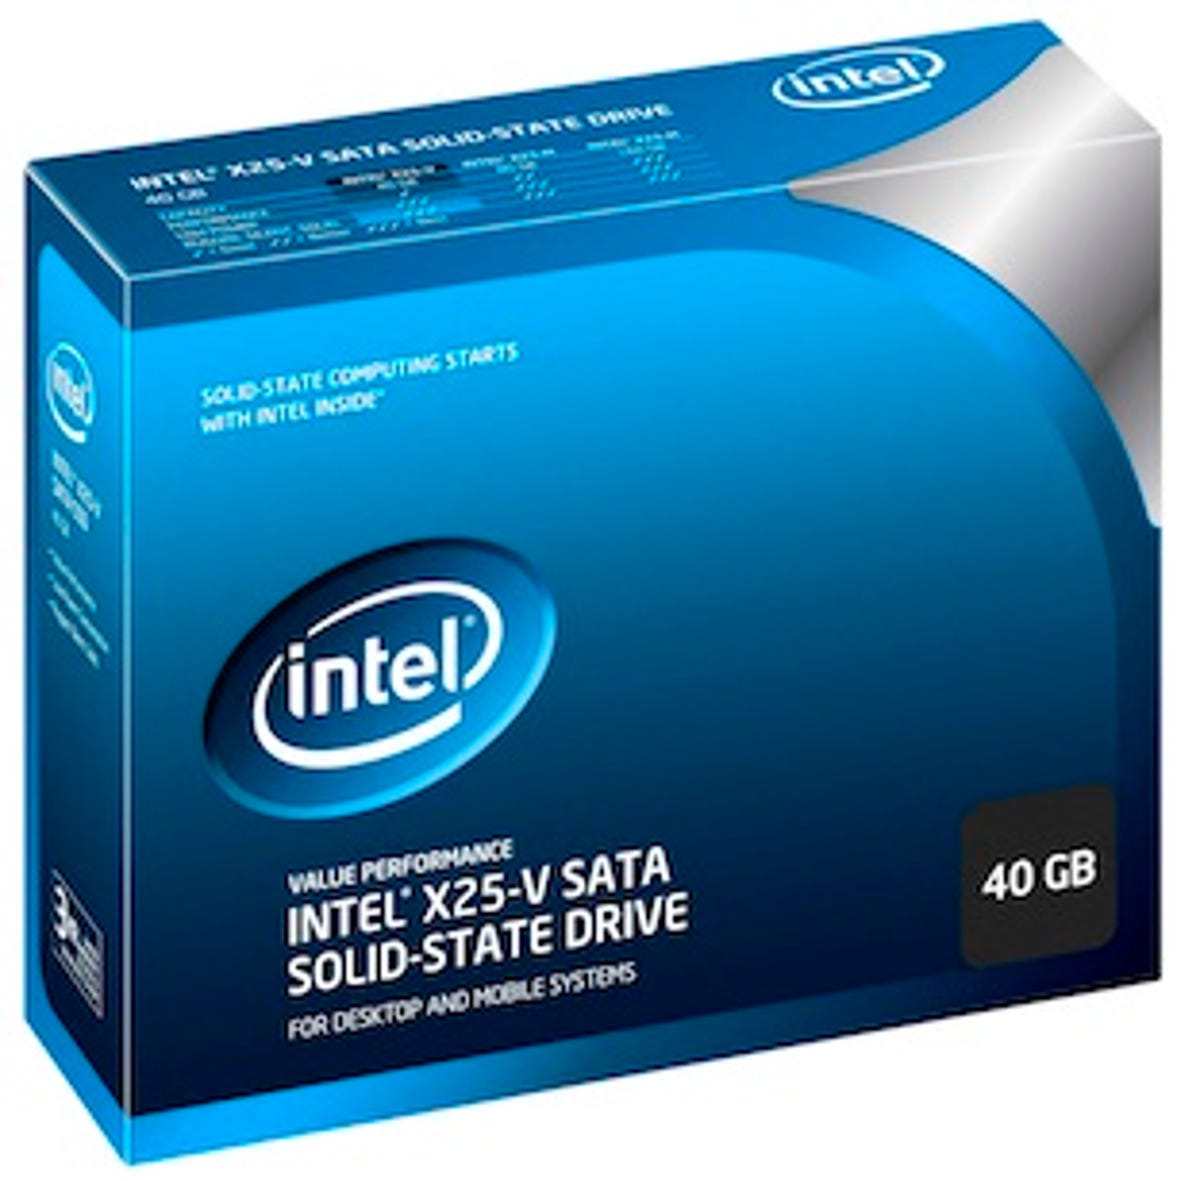 Intel Serial-ATA 40GB SSD retails for $125